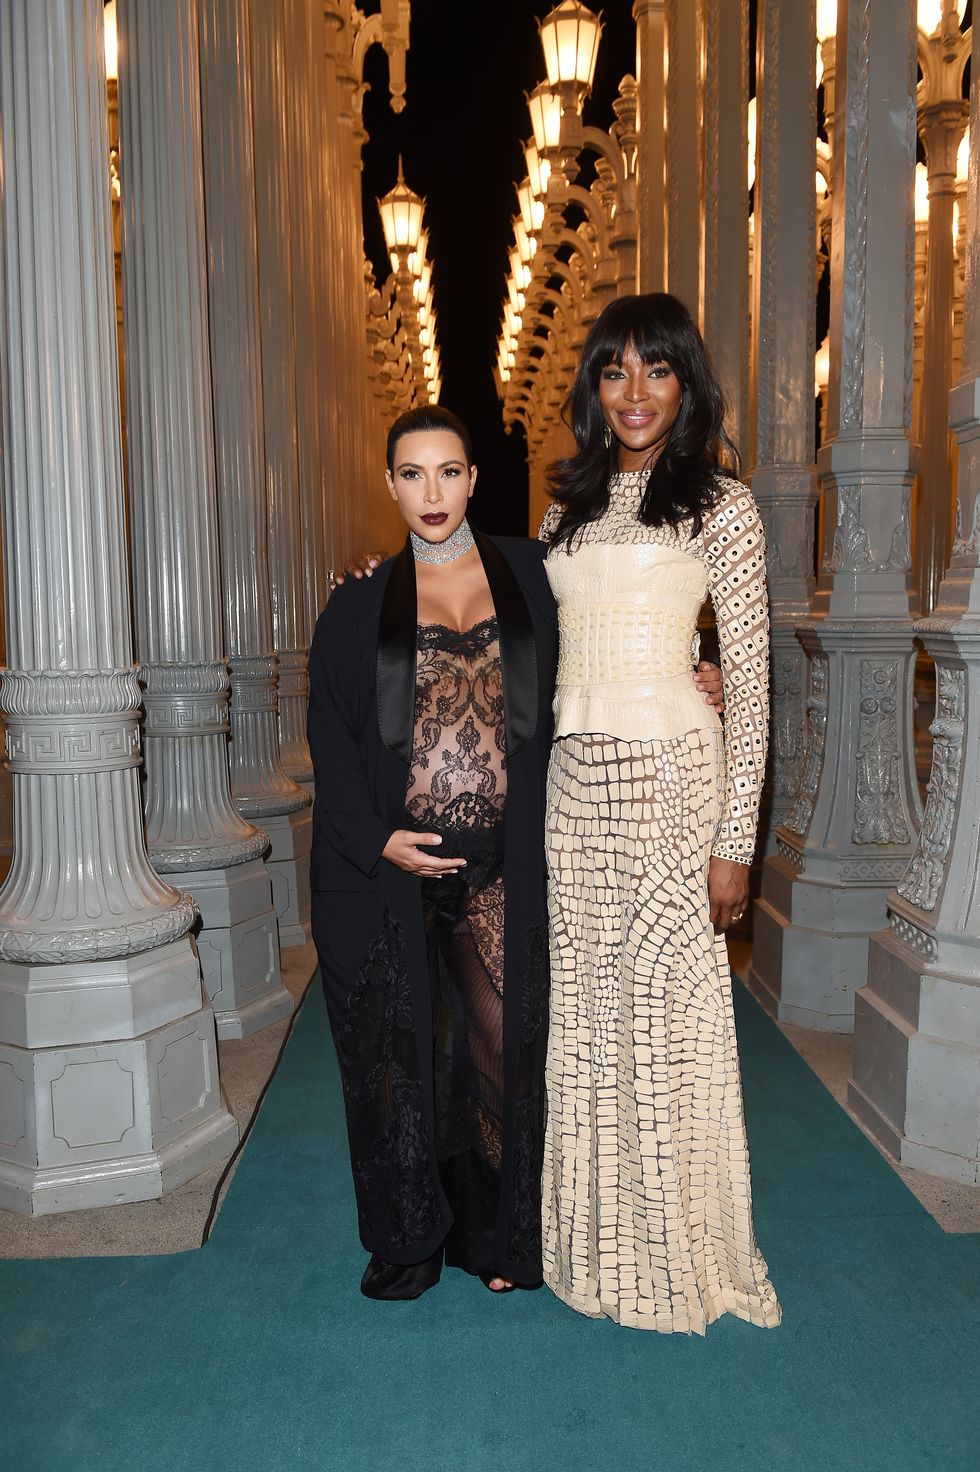 Kim Kardashian Covers Her Post-Baby Body Under Fur Coat